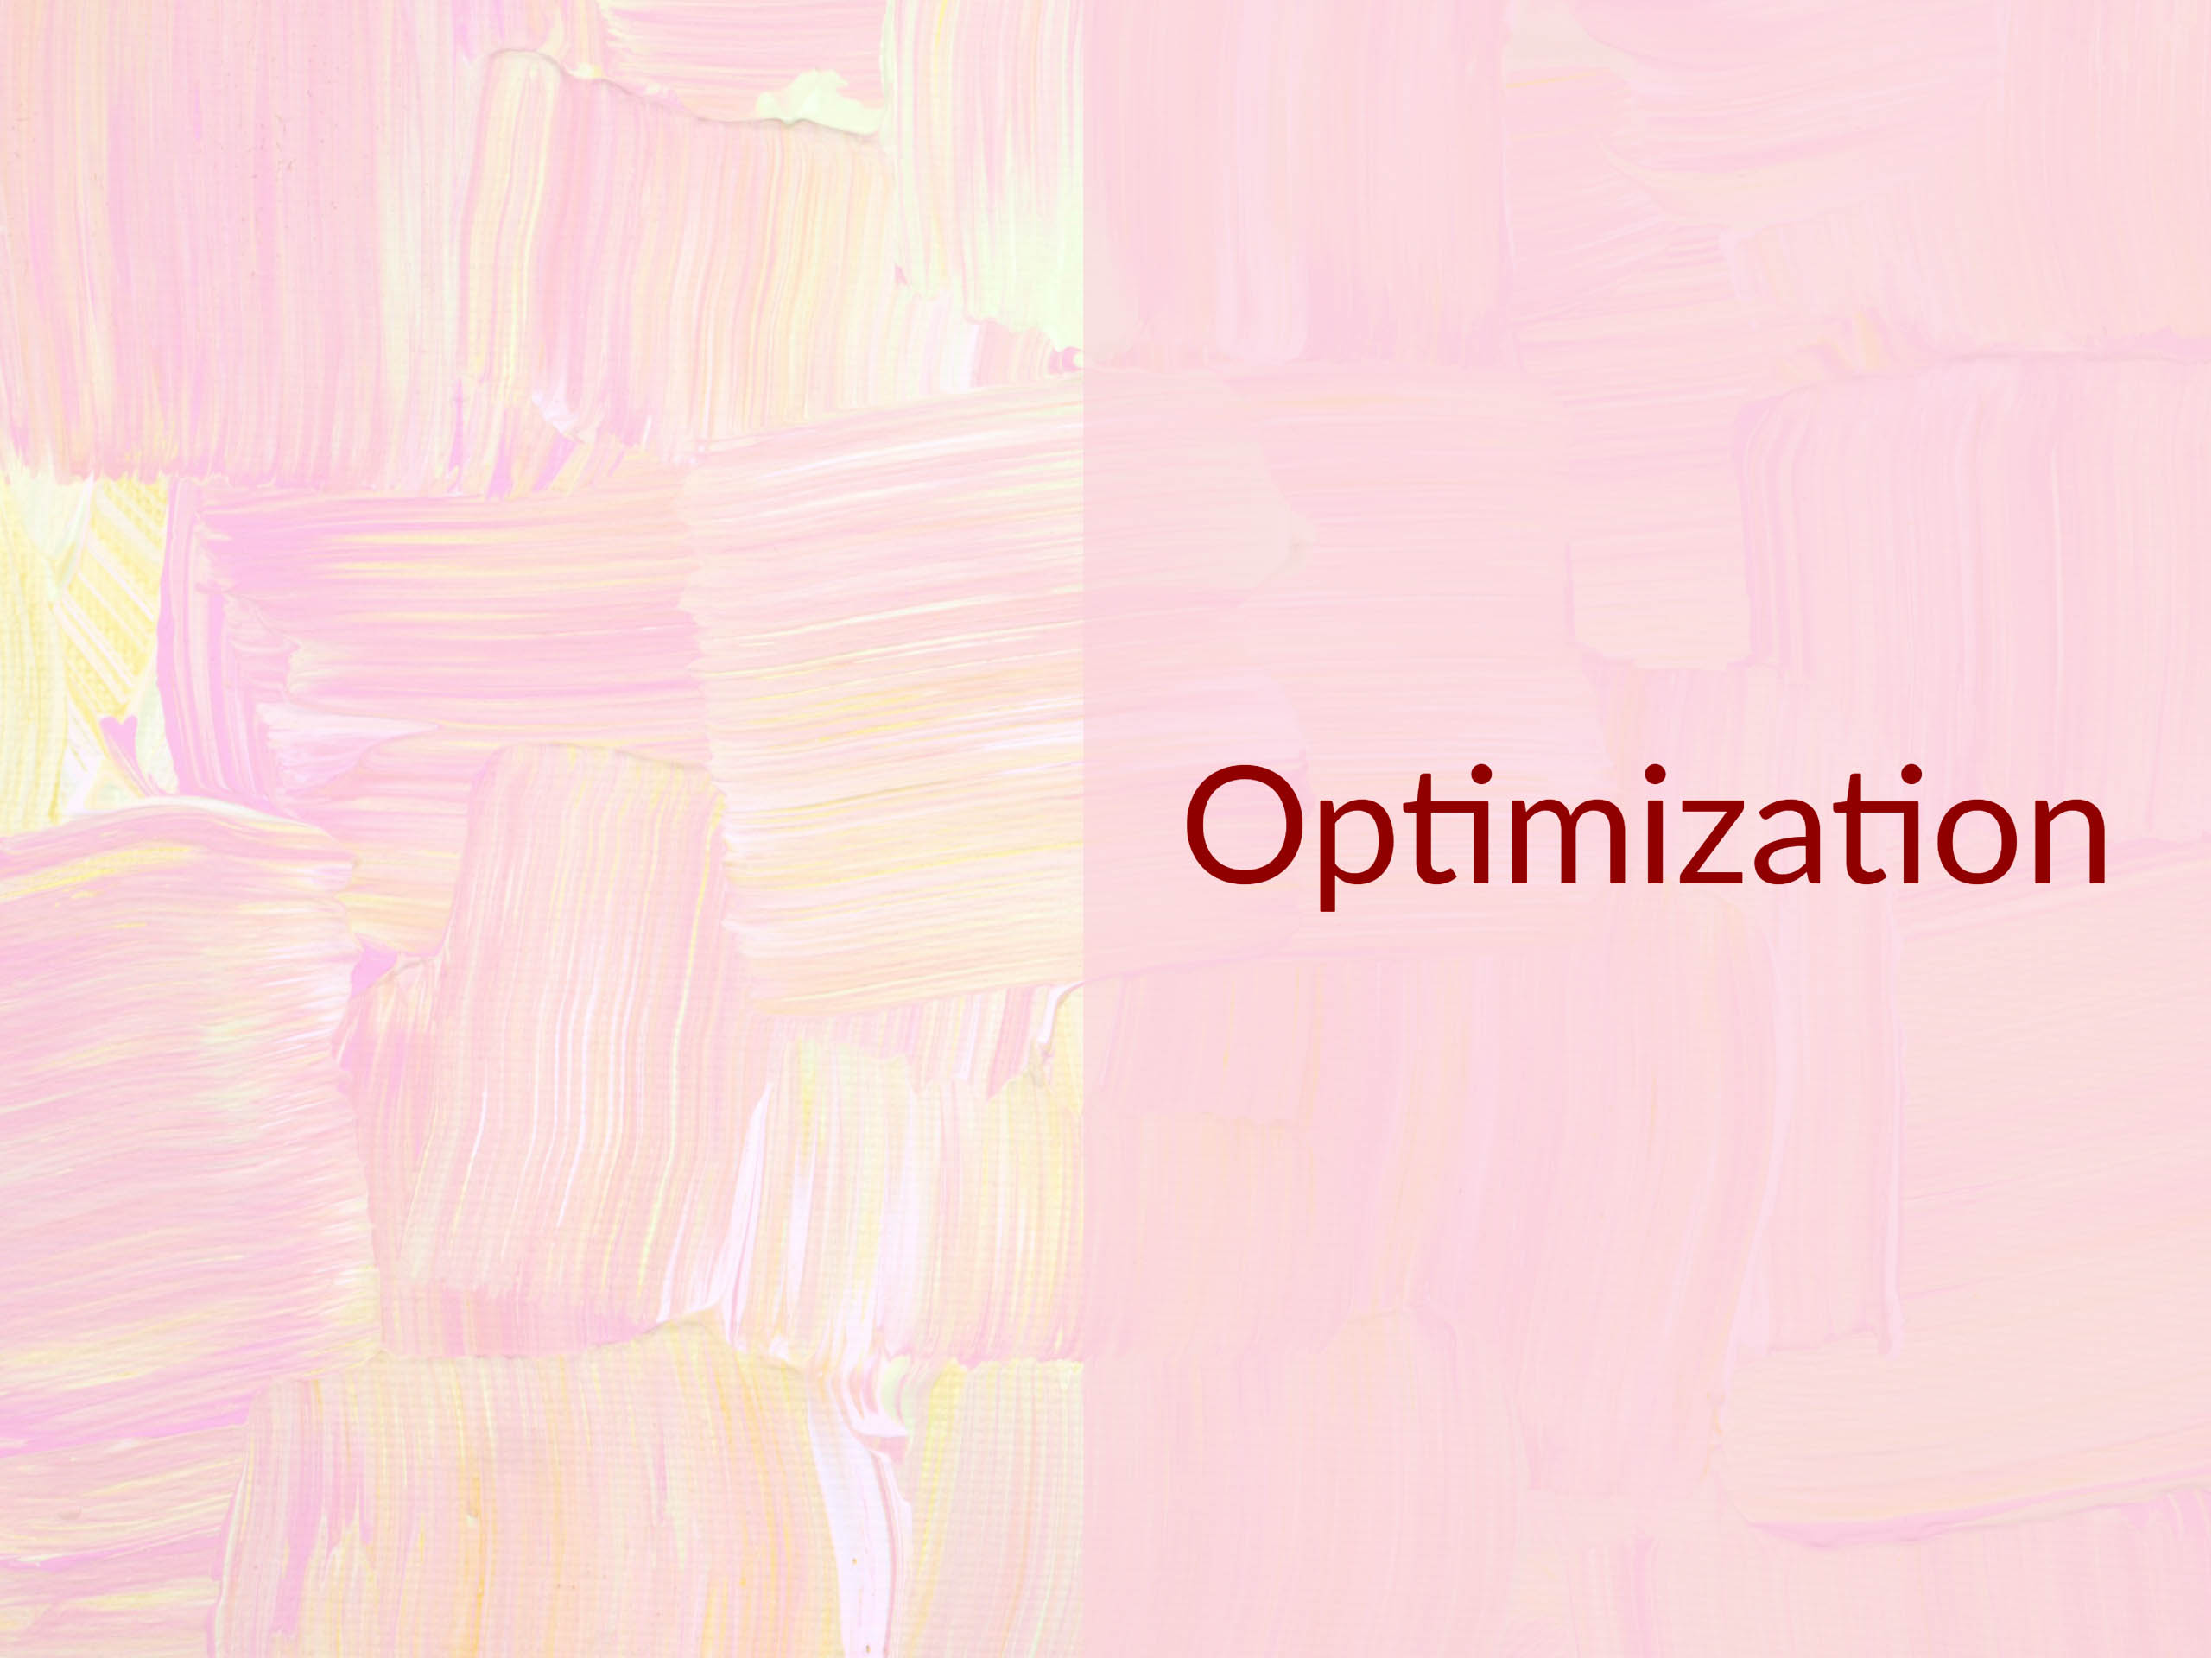 Pastel paint with the caption "Optimization"